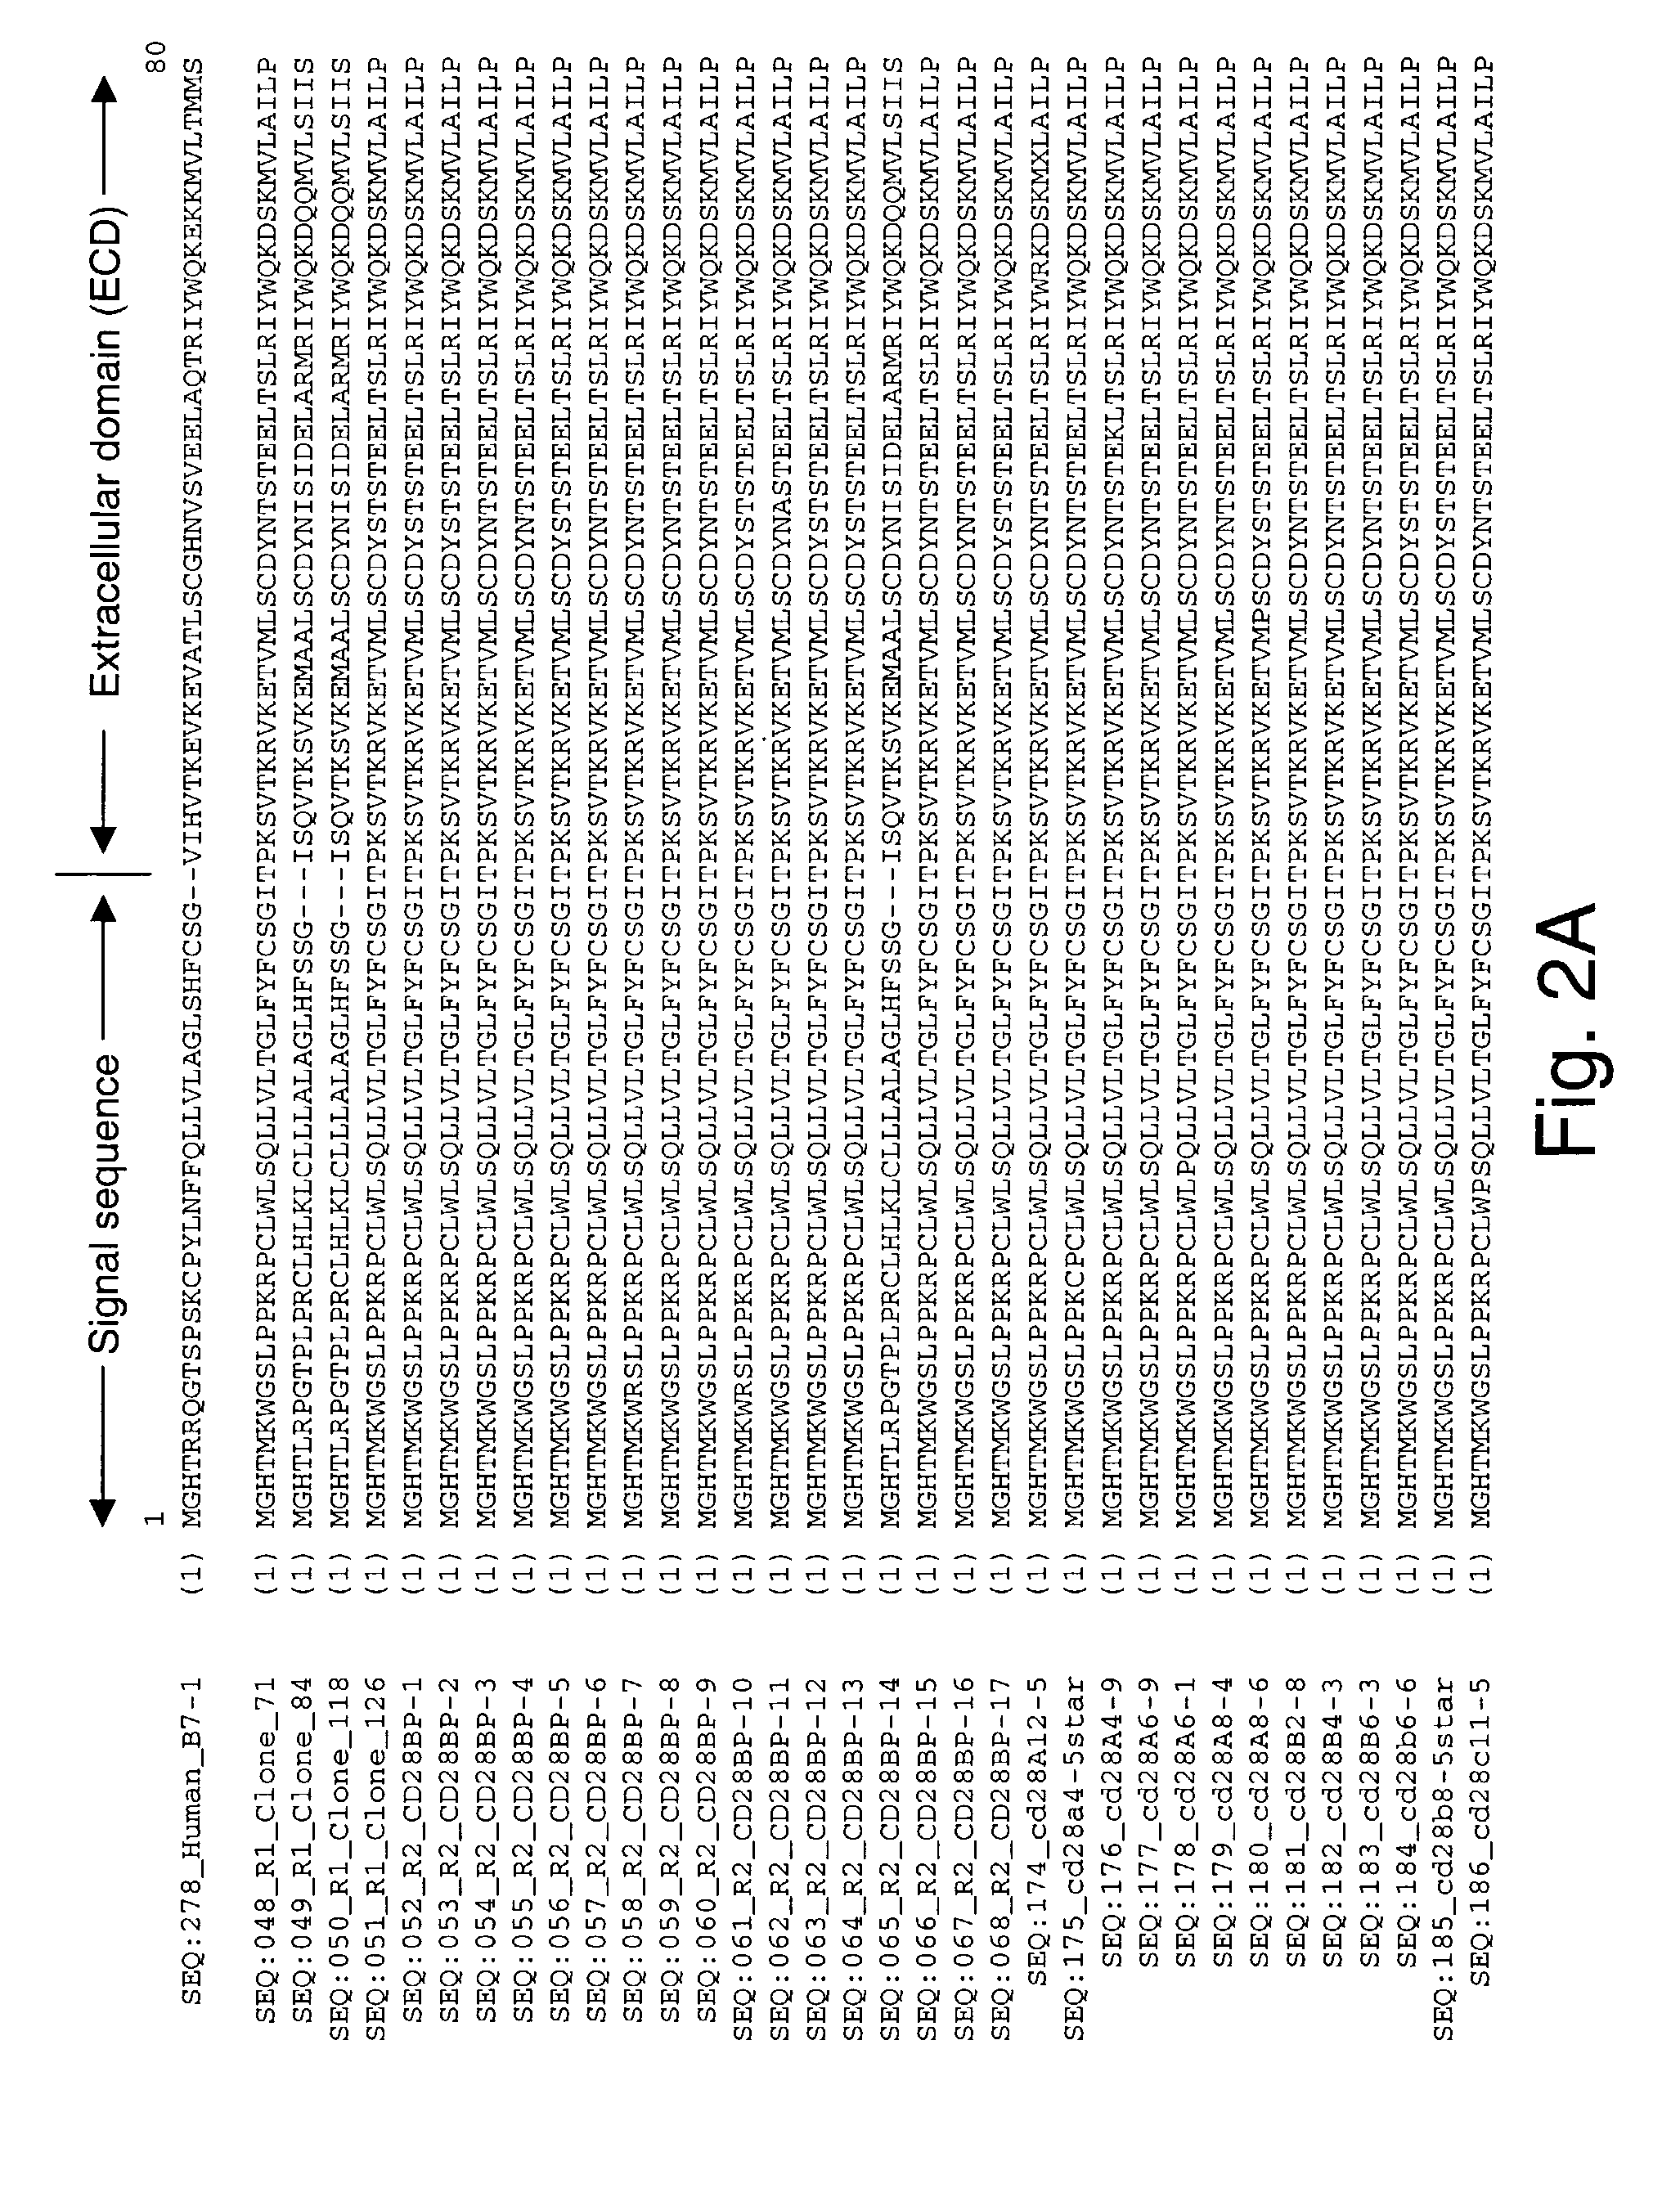 Co-stimulatory polypeptides